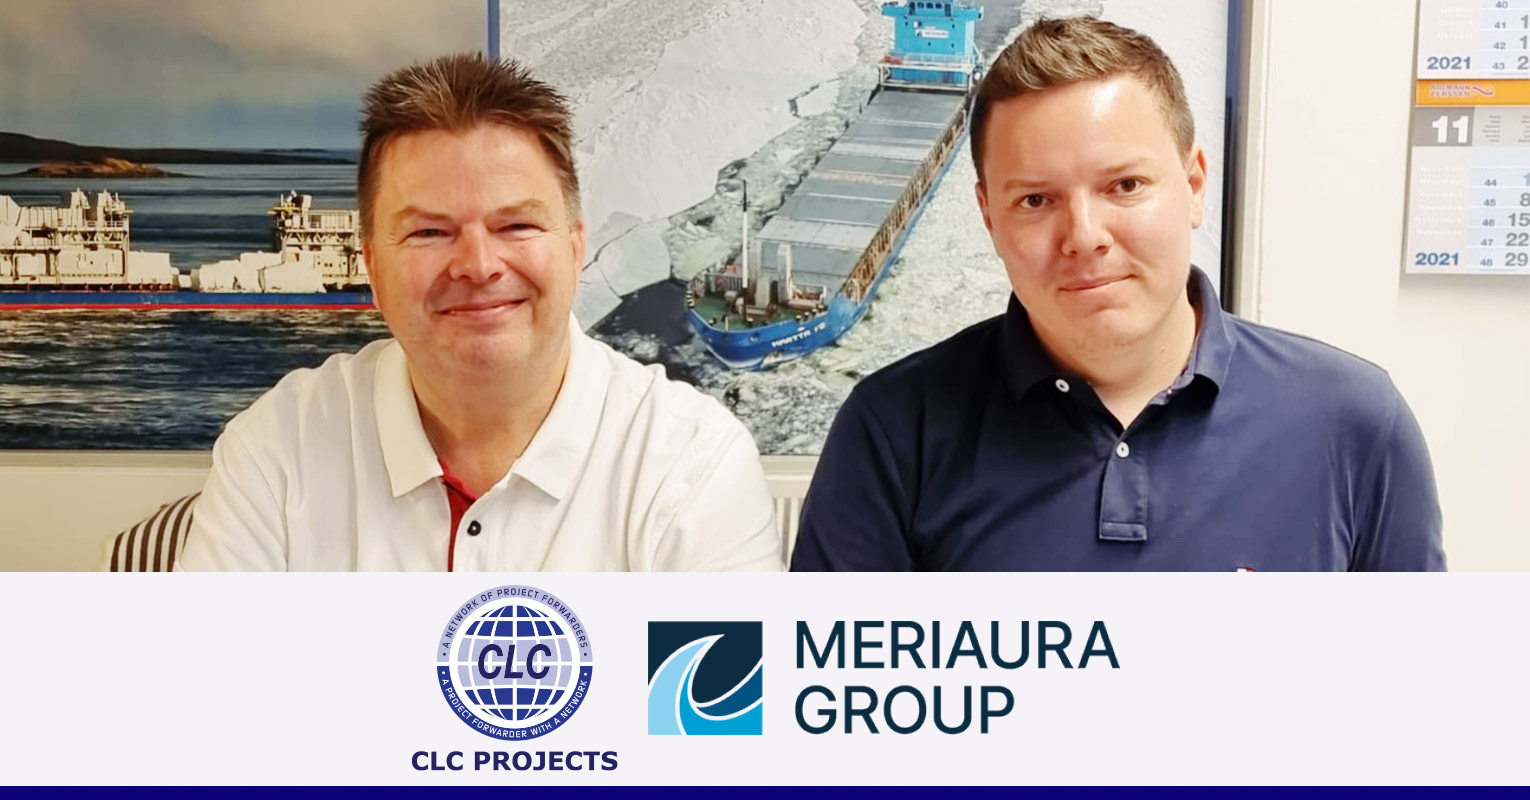 CLC Projects met with Meriaura in Turku Finland